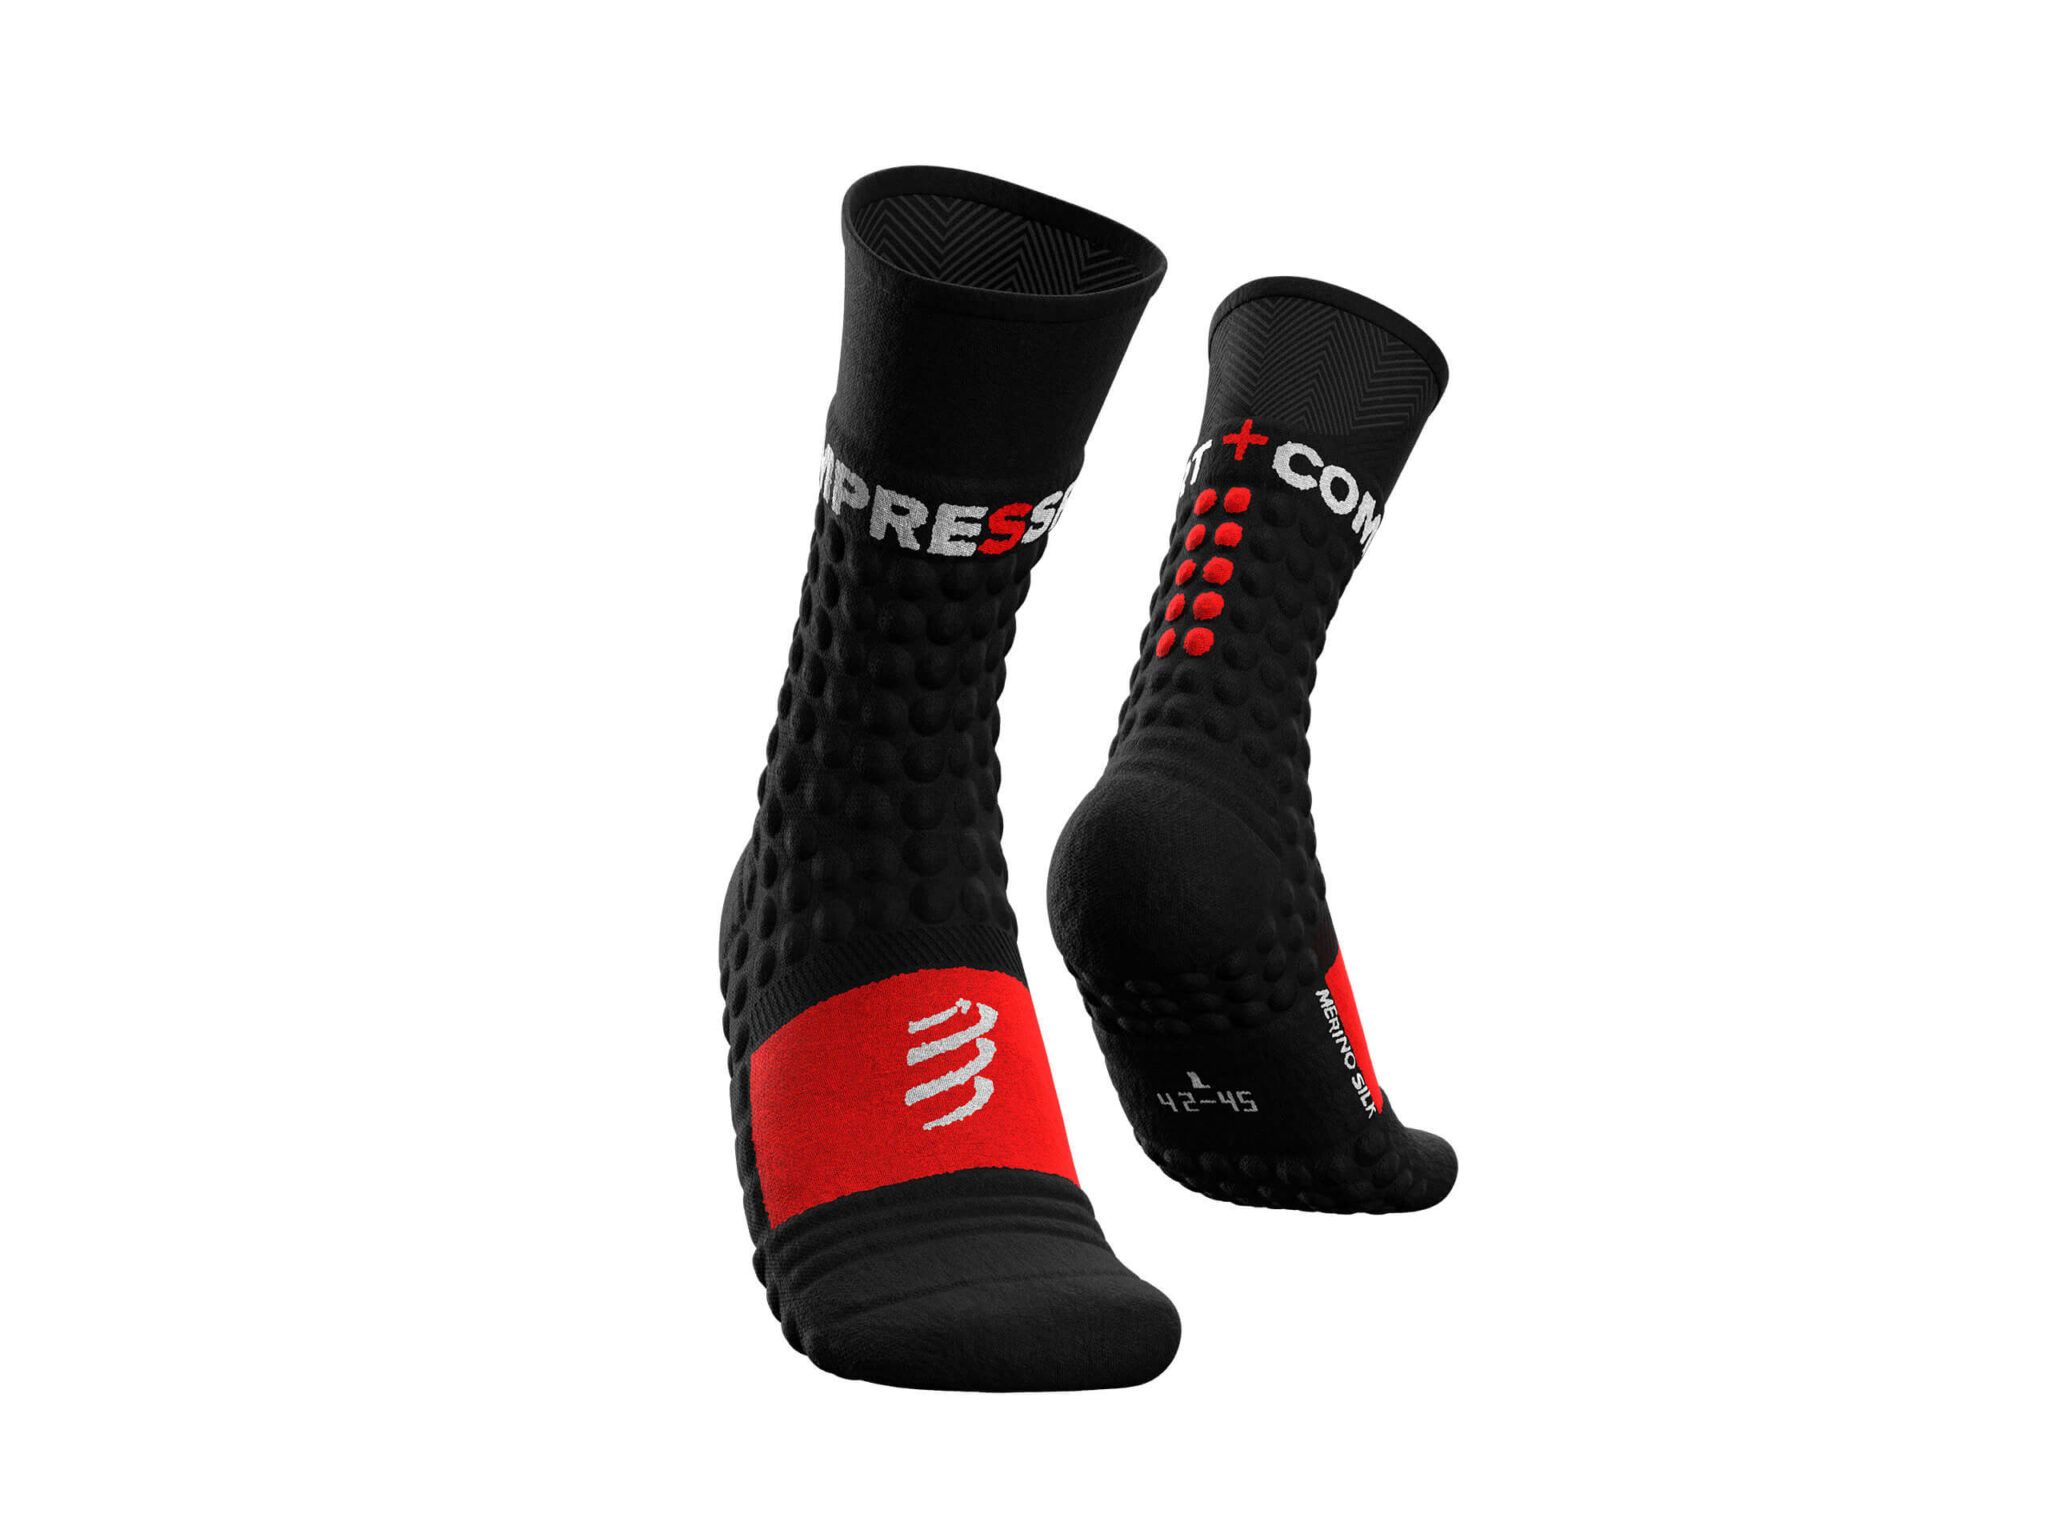 CompresSport Pro Racing Socks Winter Run